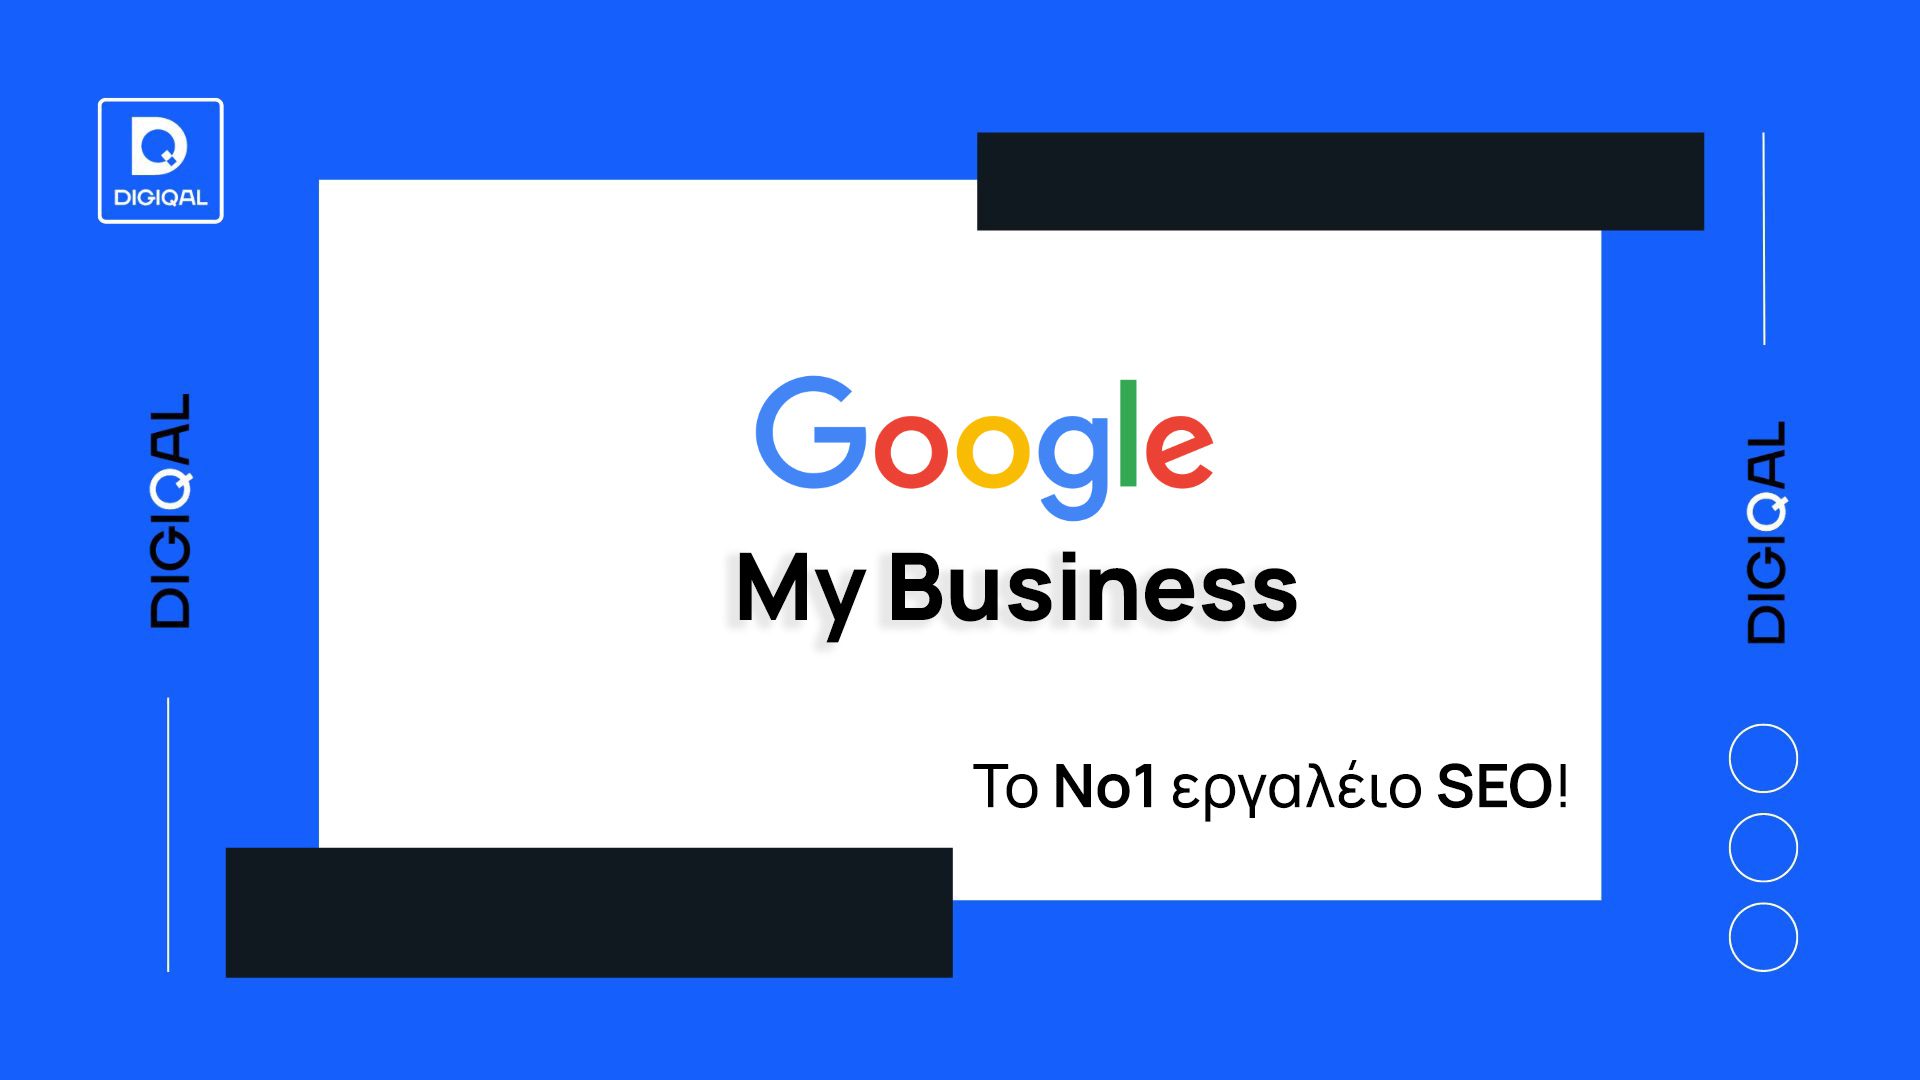 Google My Business: Πως να δημιουργήσετε το εταιρικό σας προφίλ και τι να προσέξετε - Κατασκευή ιστοσελίδων Θεσσαλονίκη